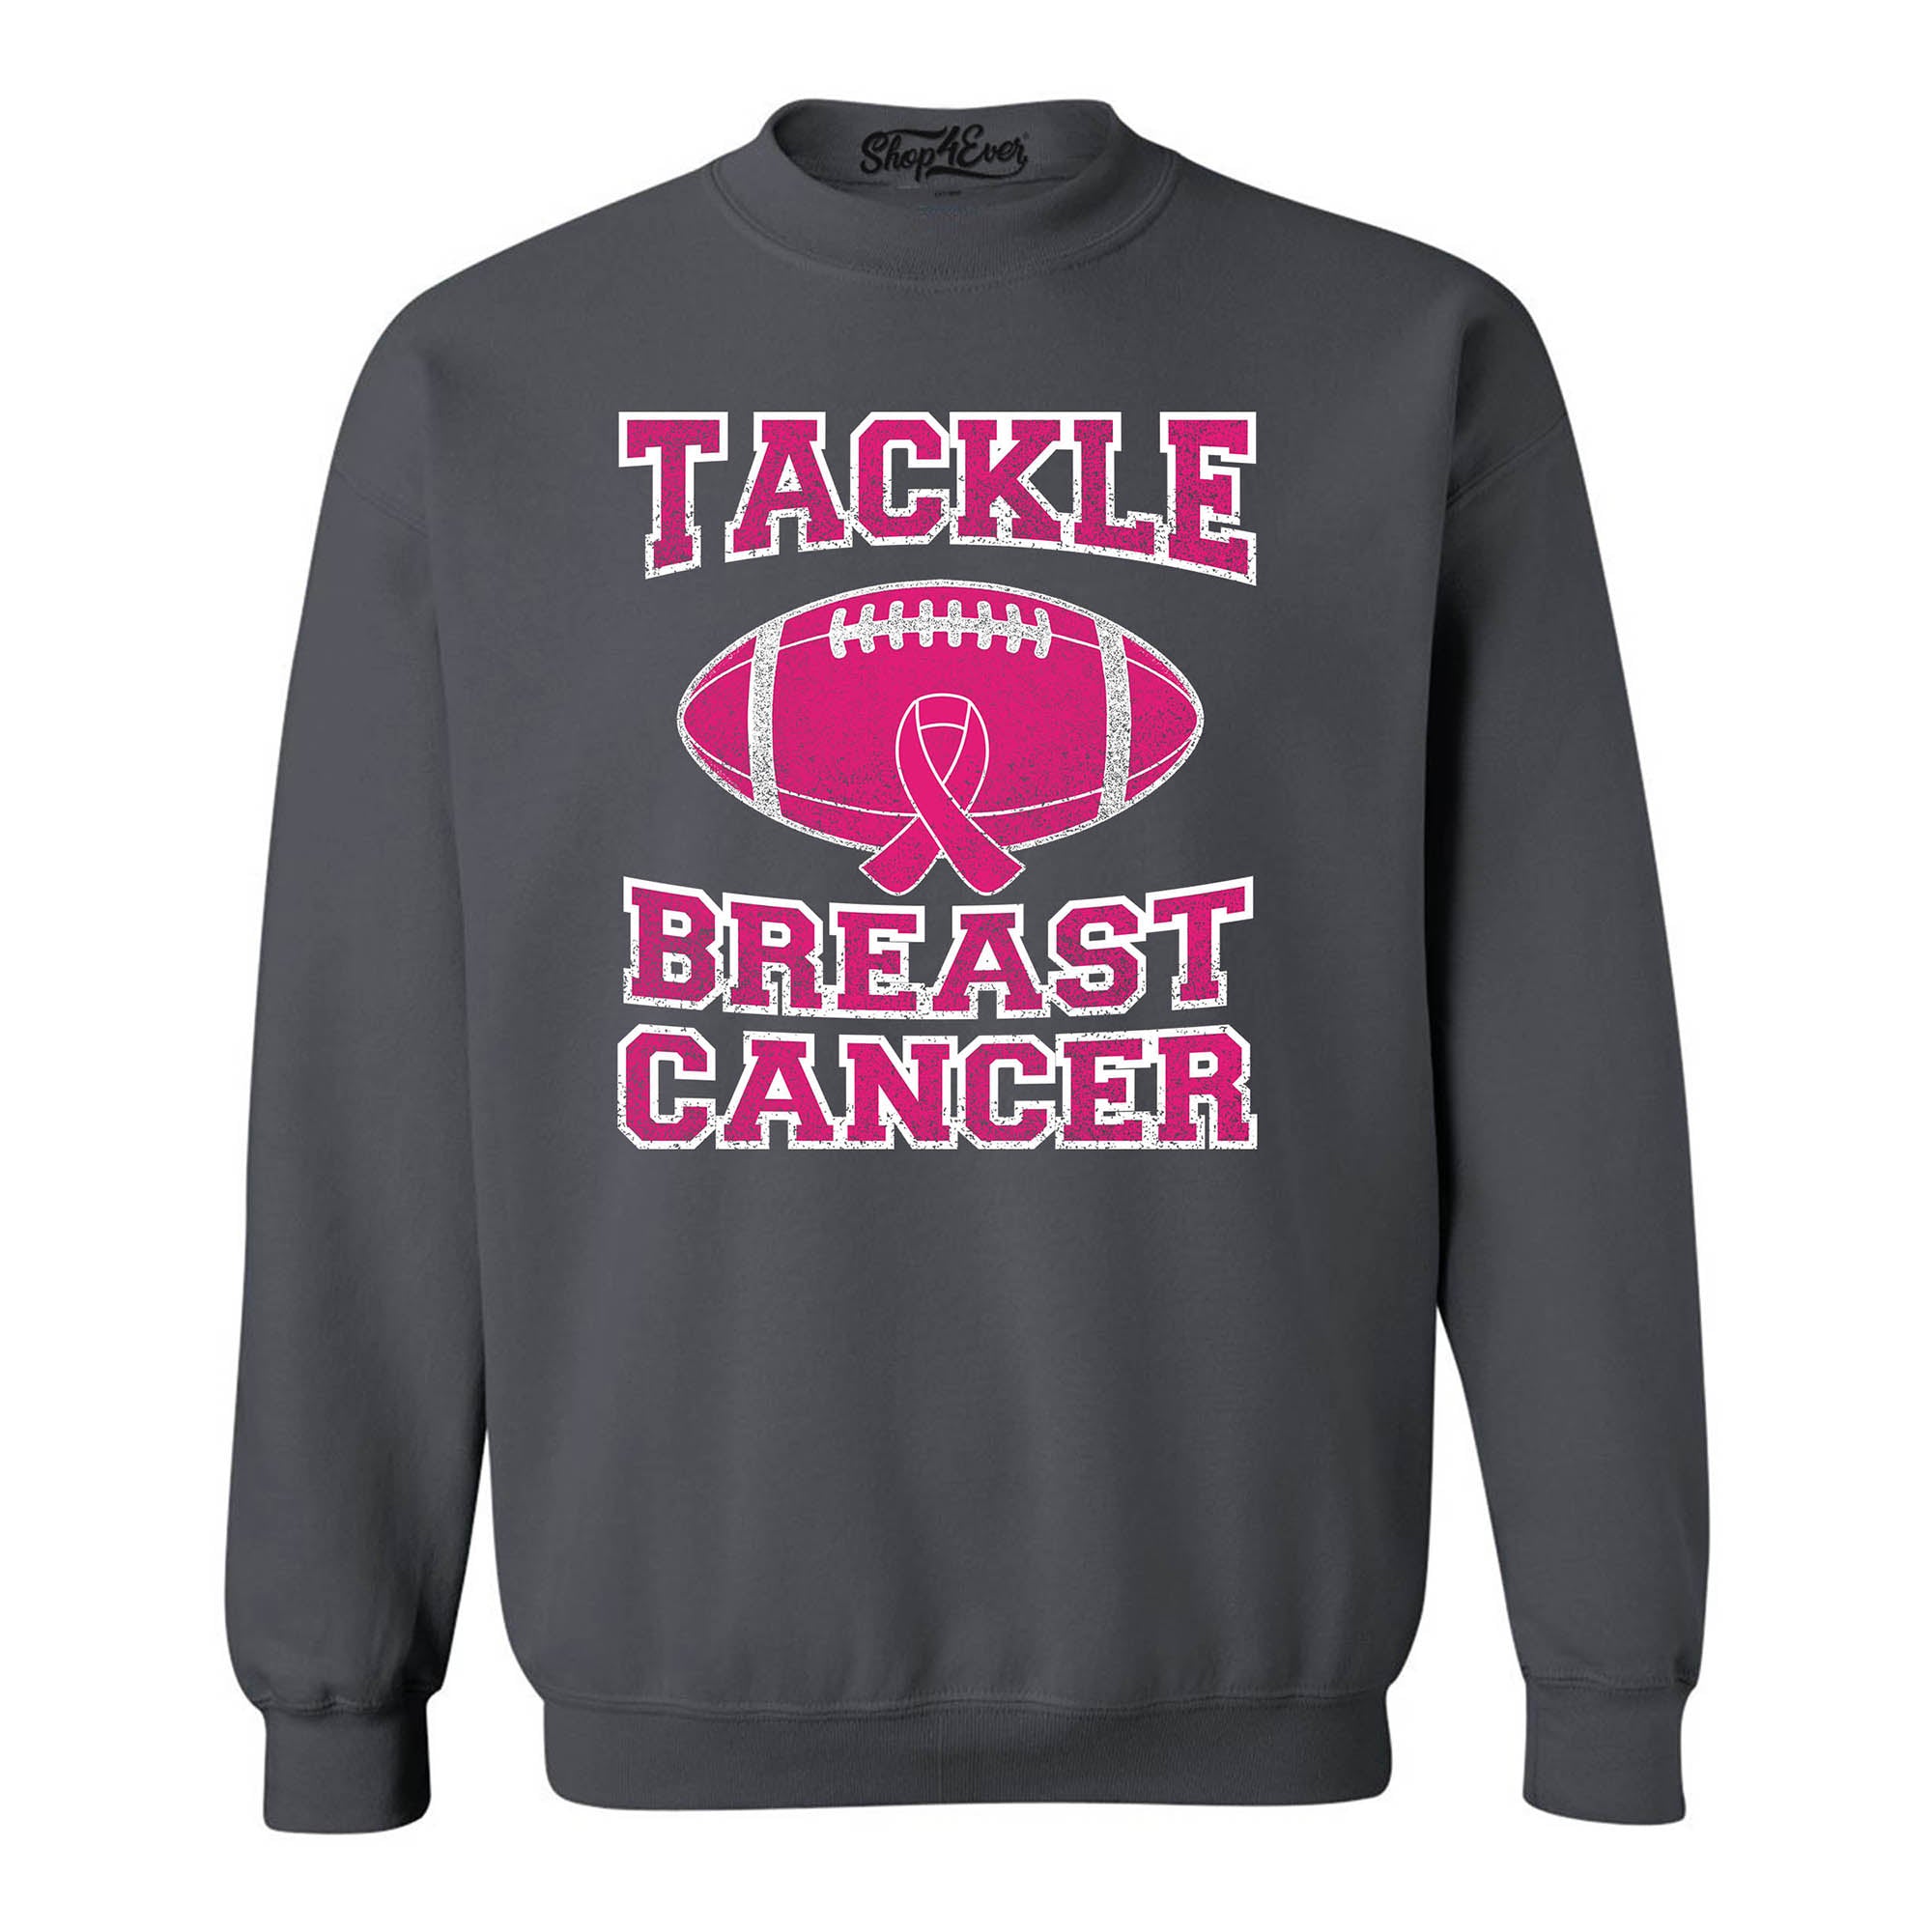 Tackle Breast Cancer Crewnecks Breast Cancer Awareness Sweatshirts